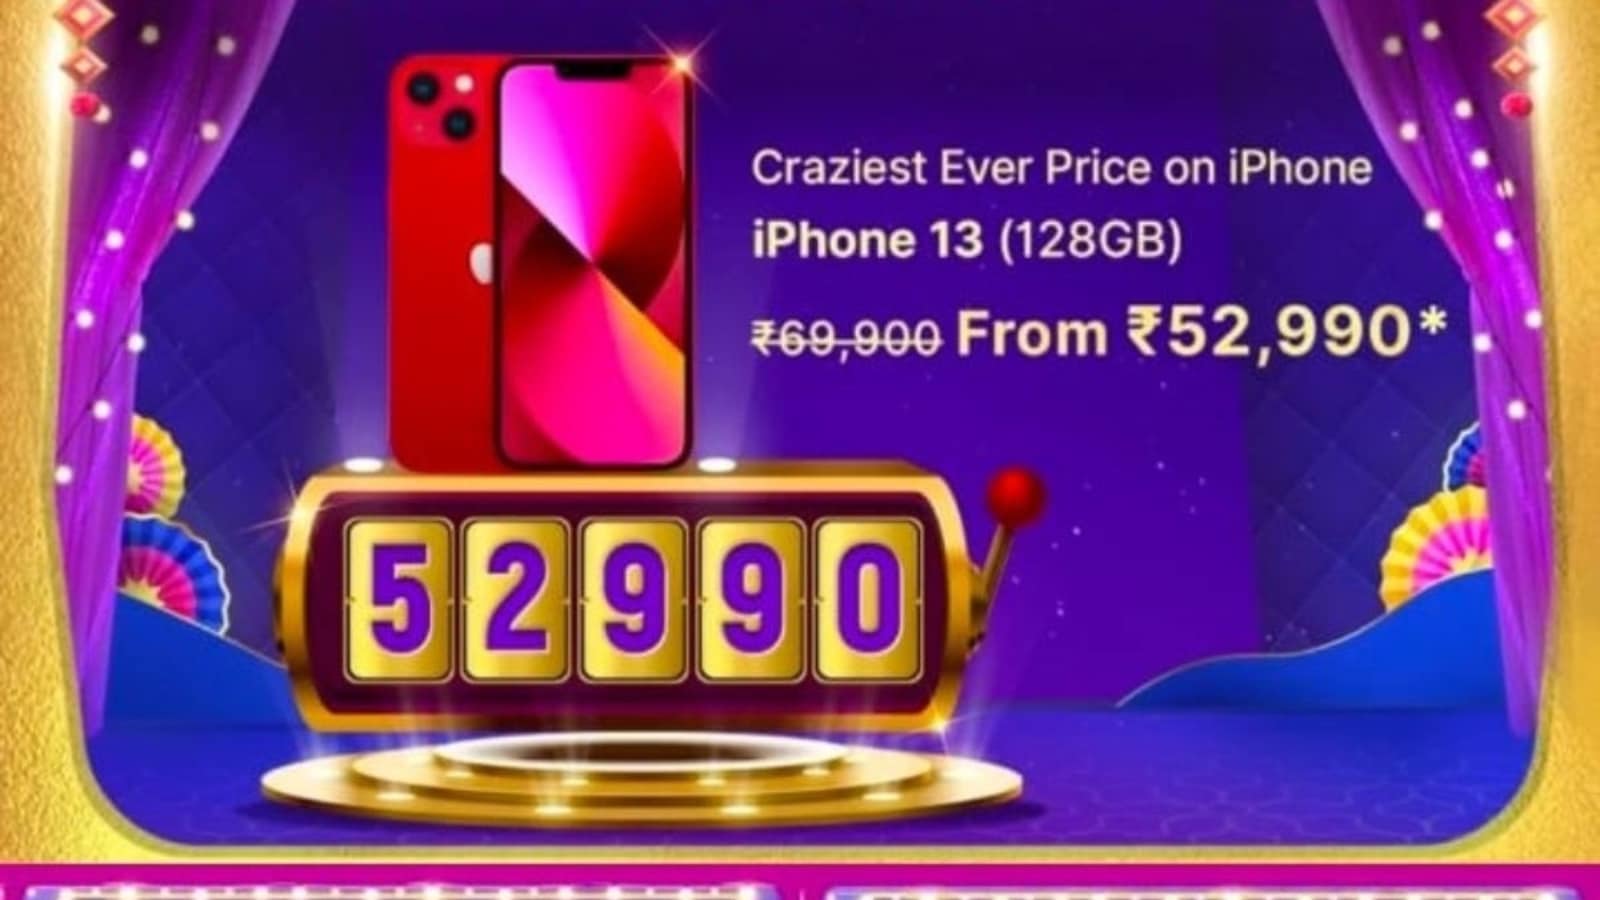 Flipkart Big Billion Days Sale Grab iPhone 13 priced at just Rs. 52990